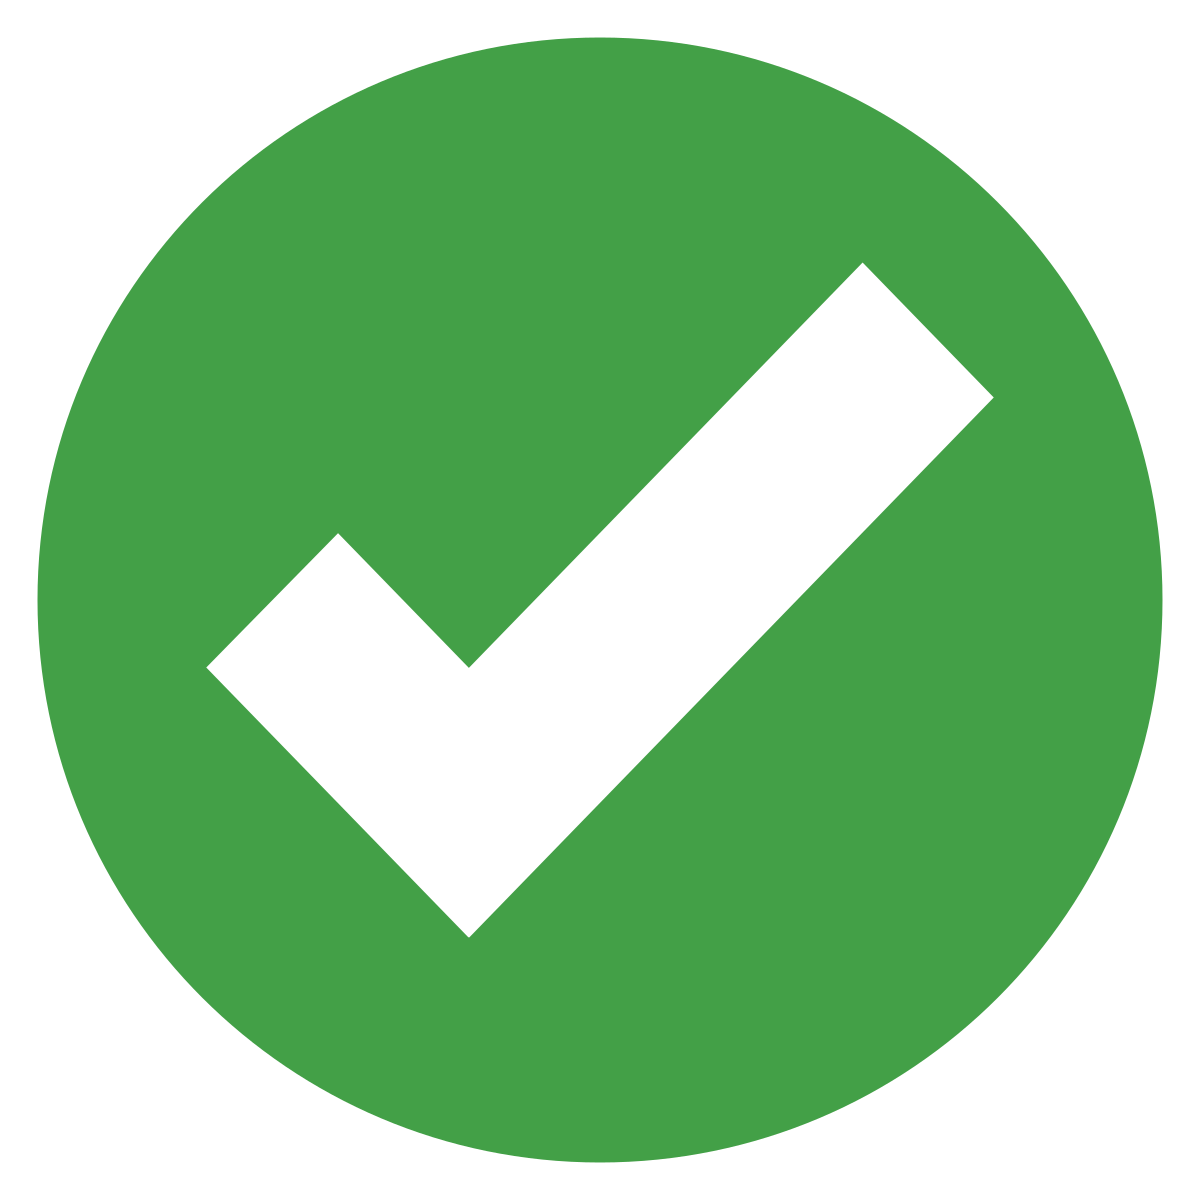 Checkmark or tick mark symbol